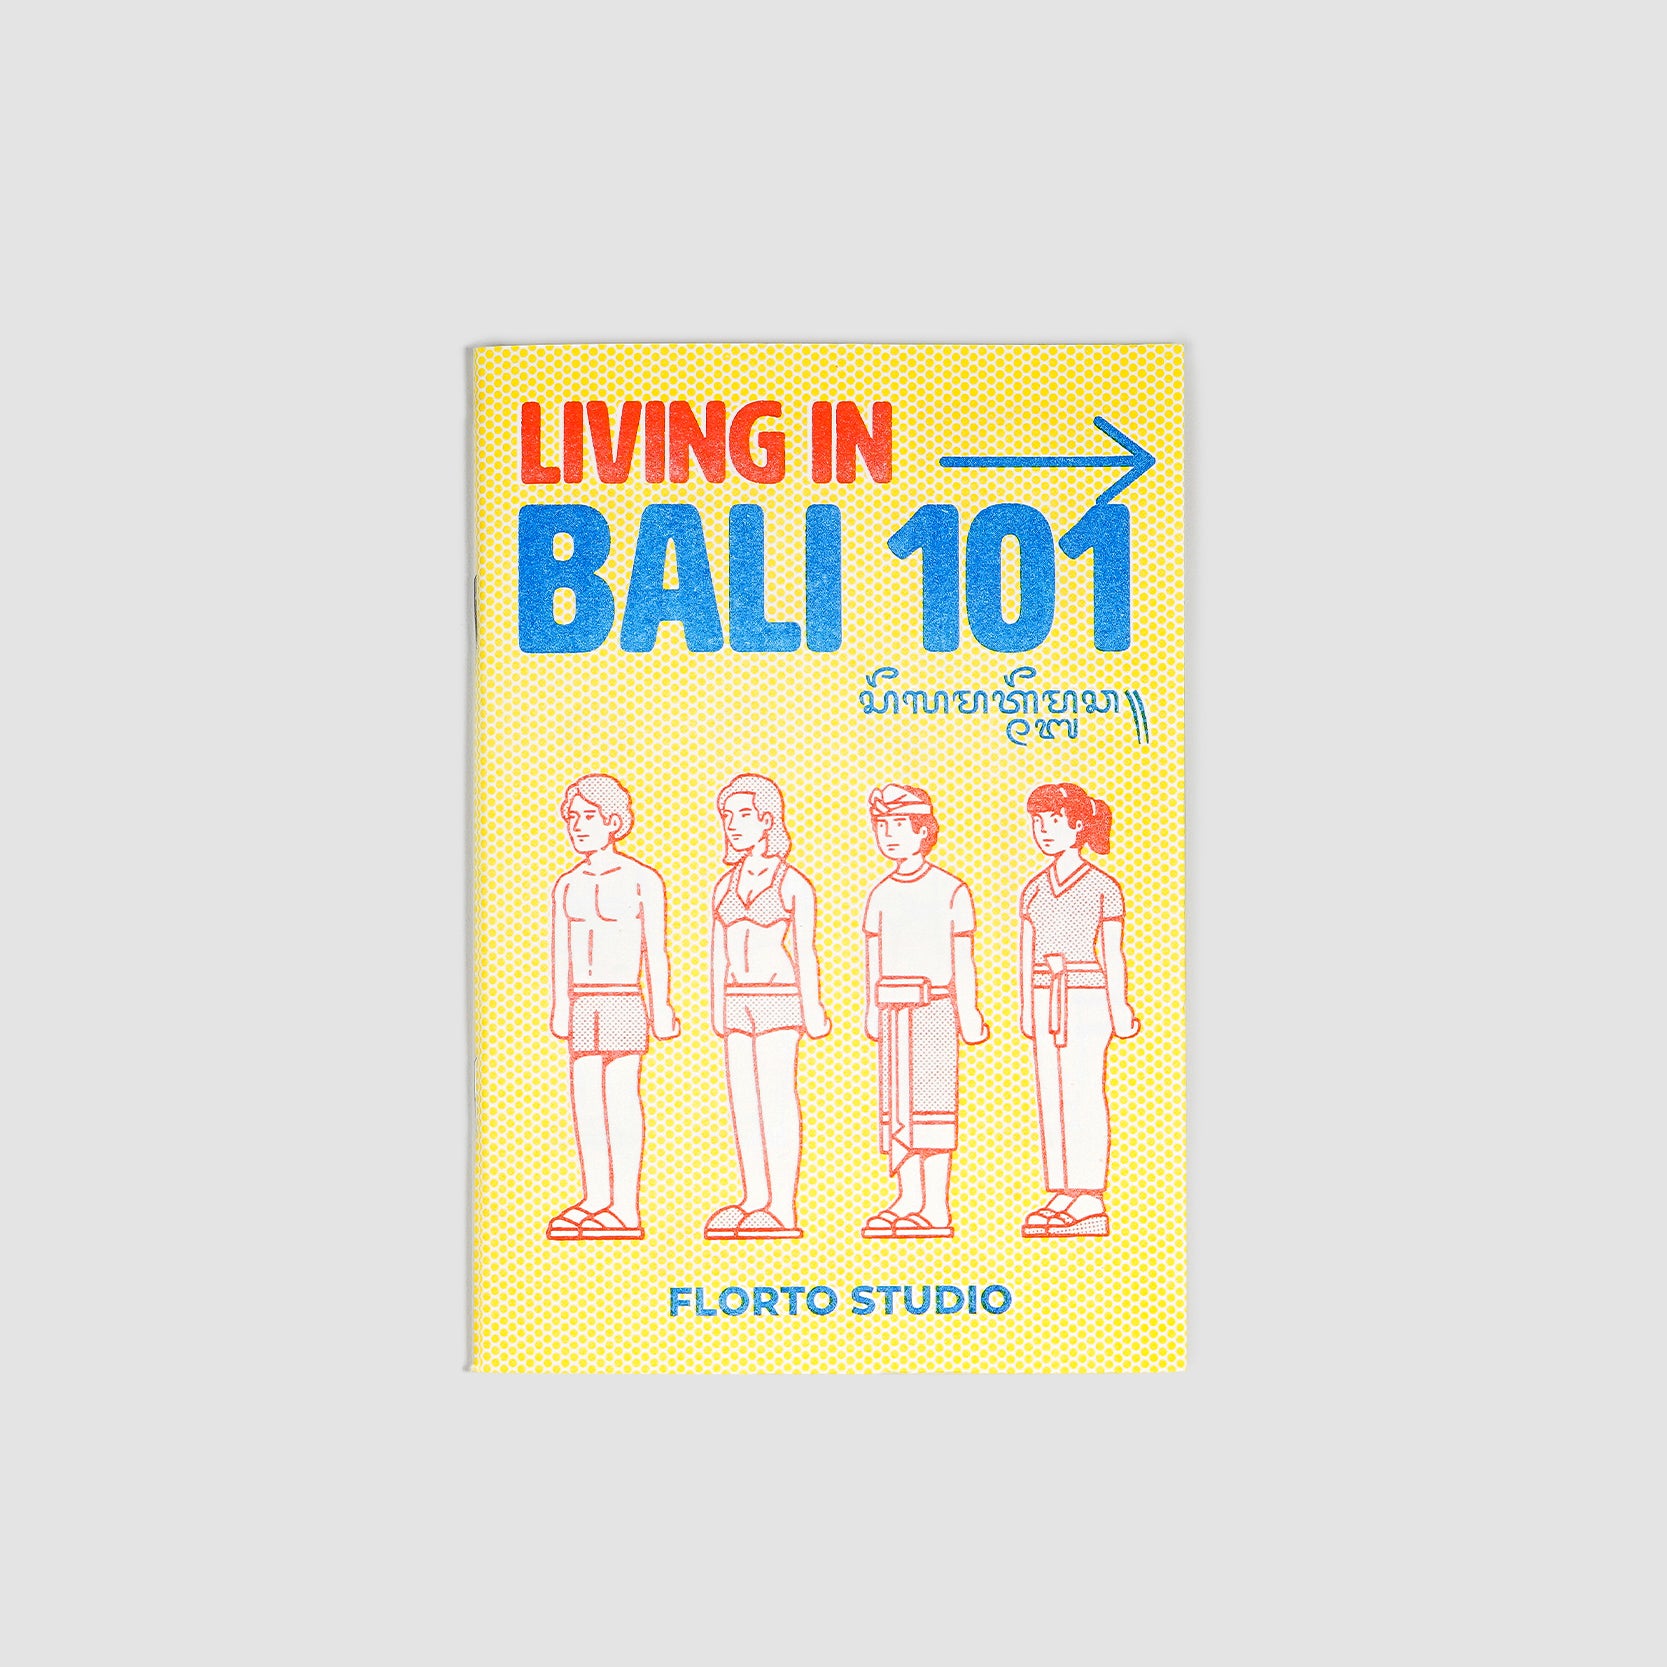 Living in Bali 101 by Florto Studio